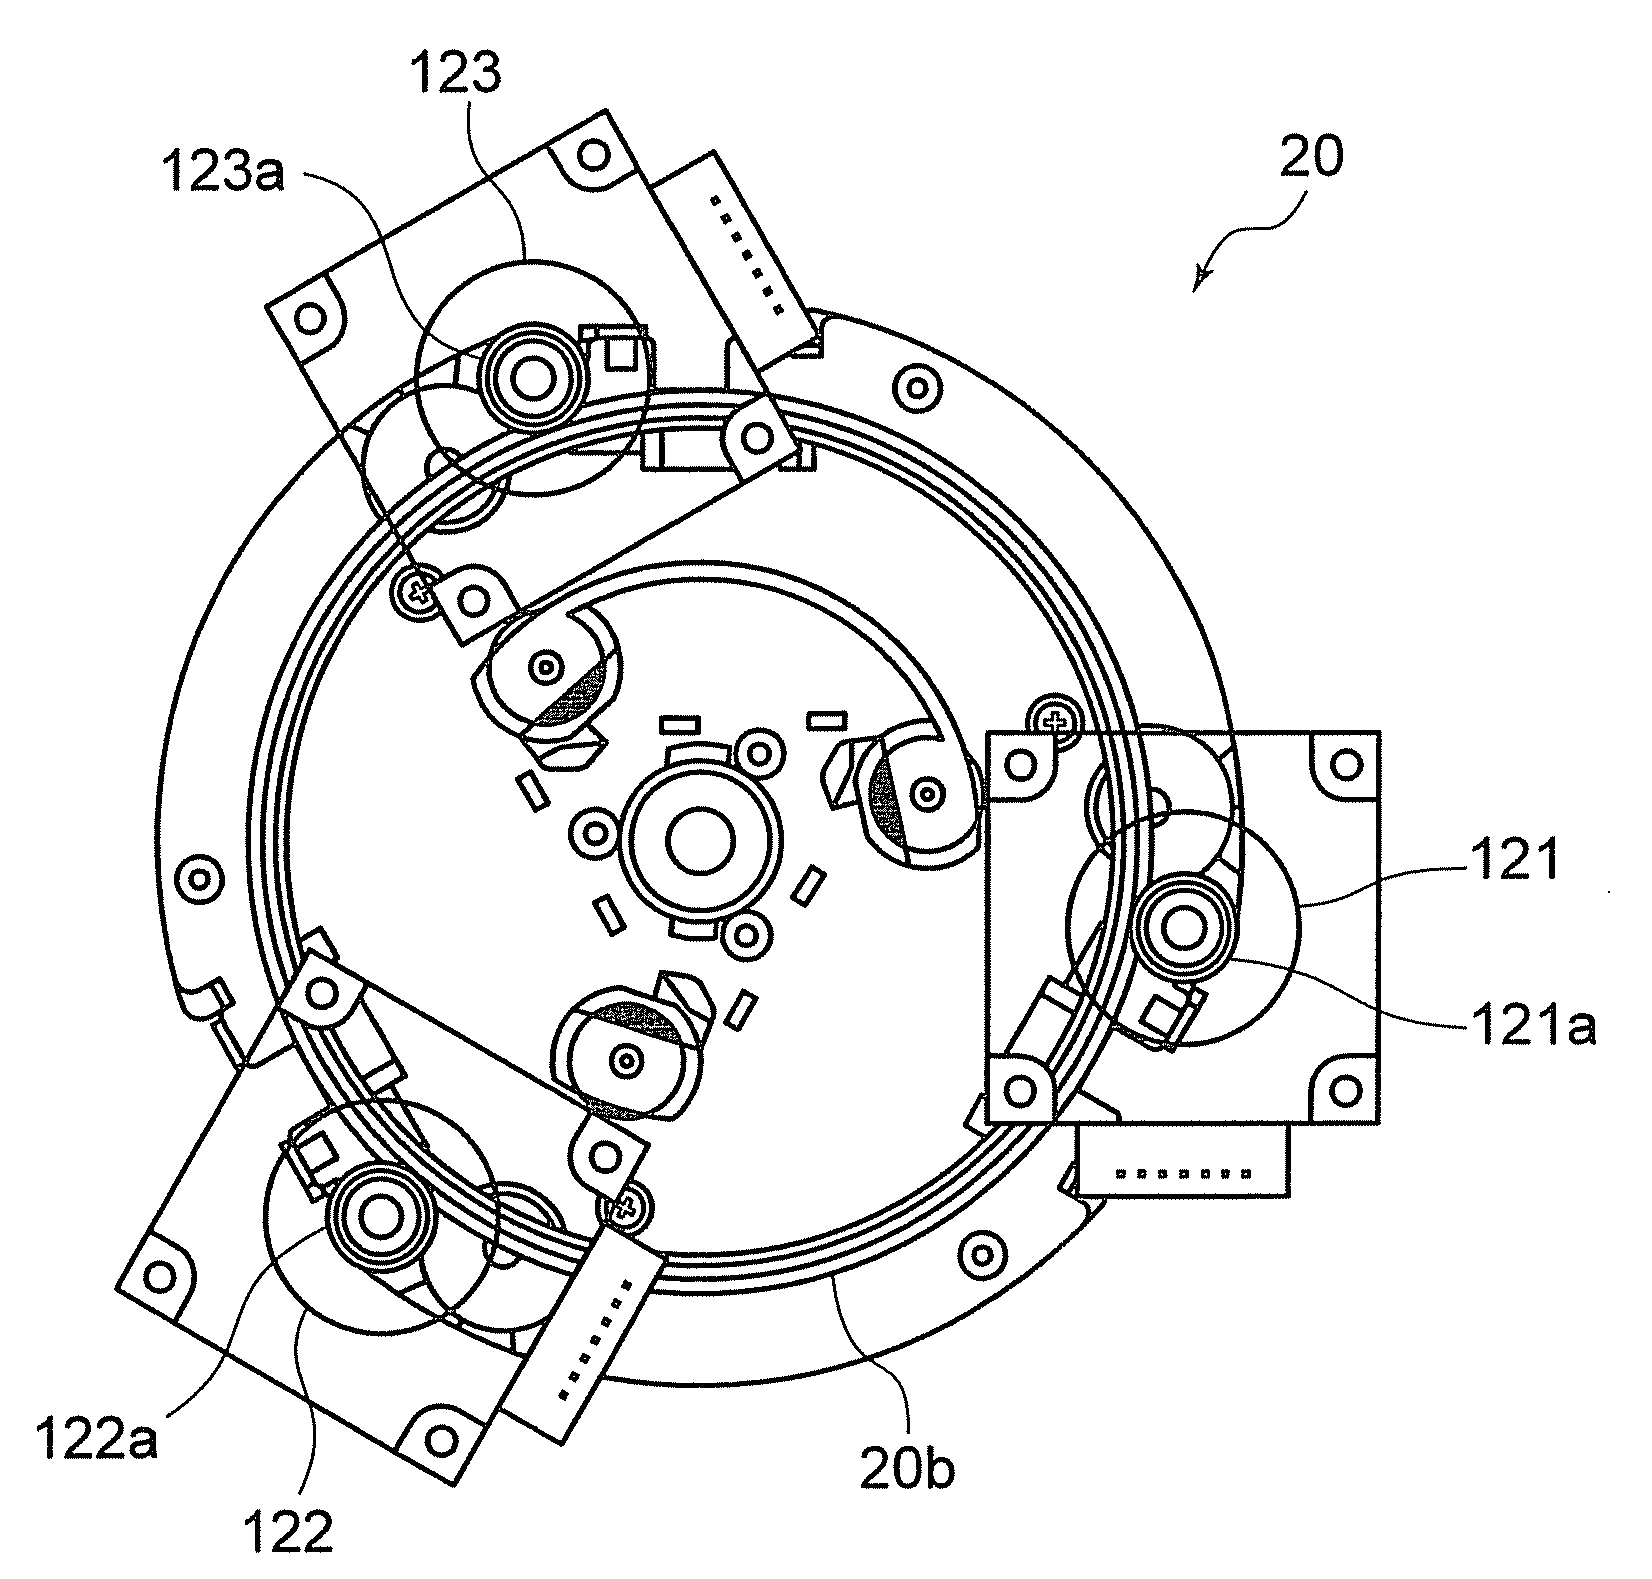 Method of rotating revolver unit using a plurality of motors